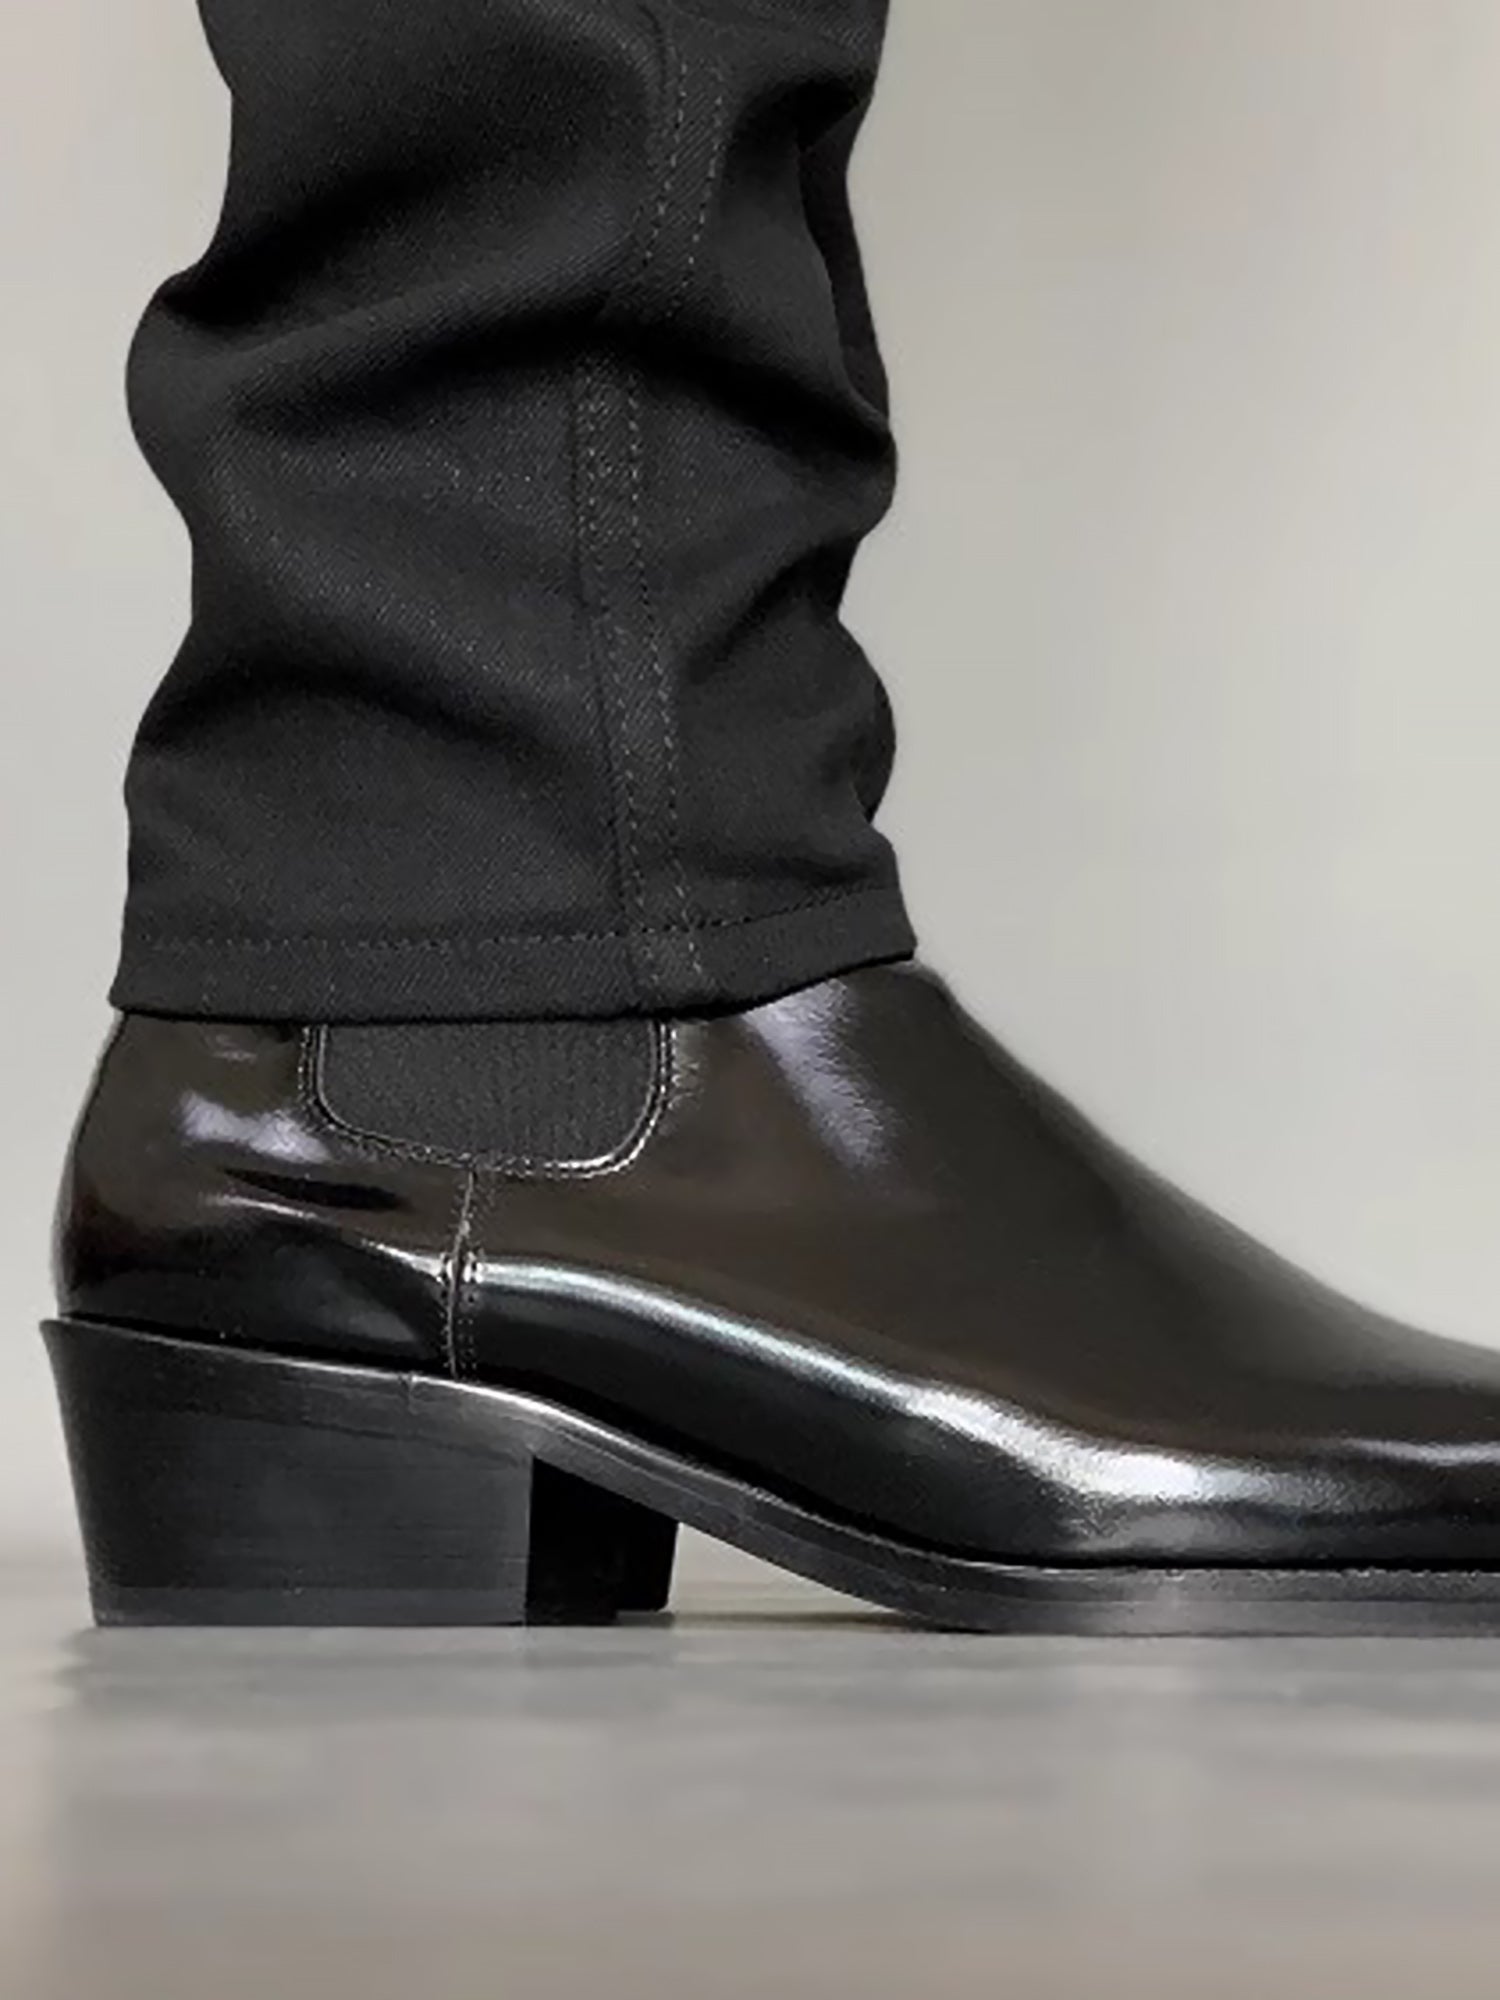 Trendy Square Toe Iron Toe Shiny British Chelsea Boots